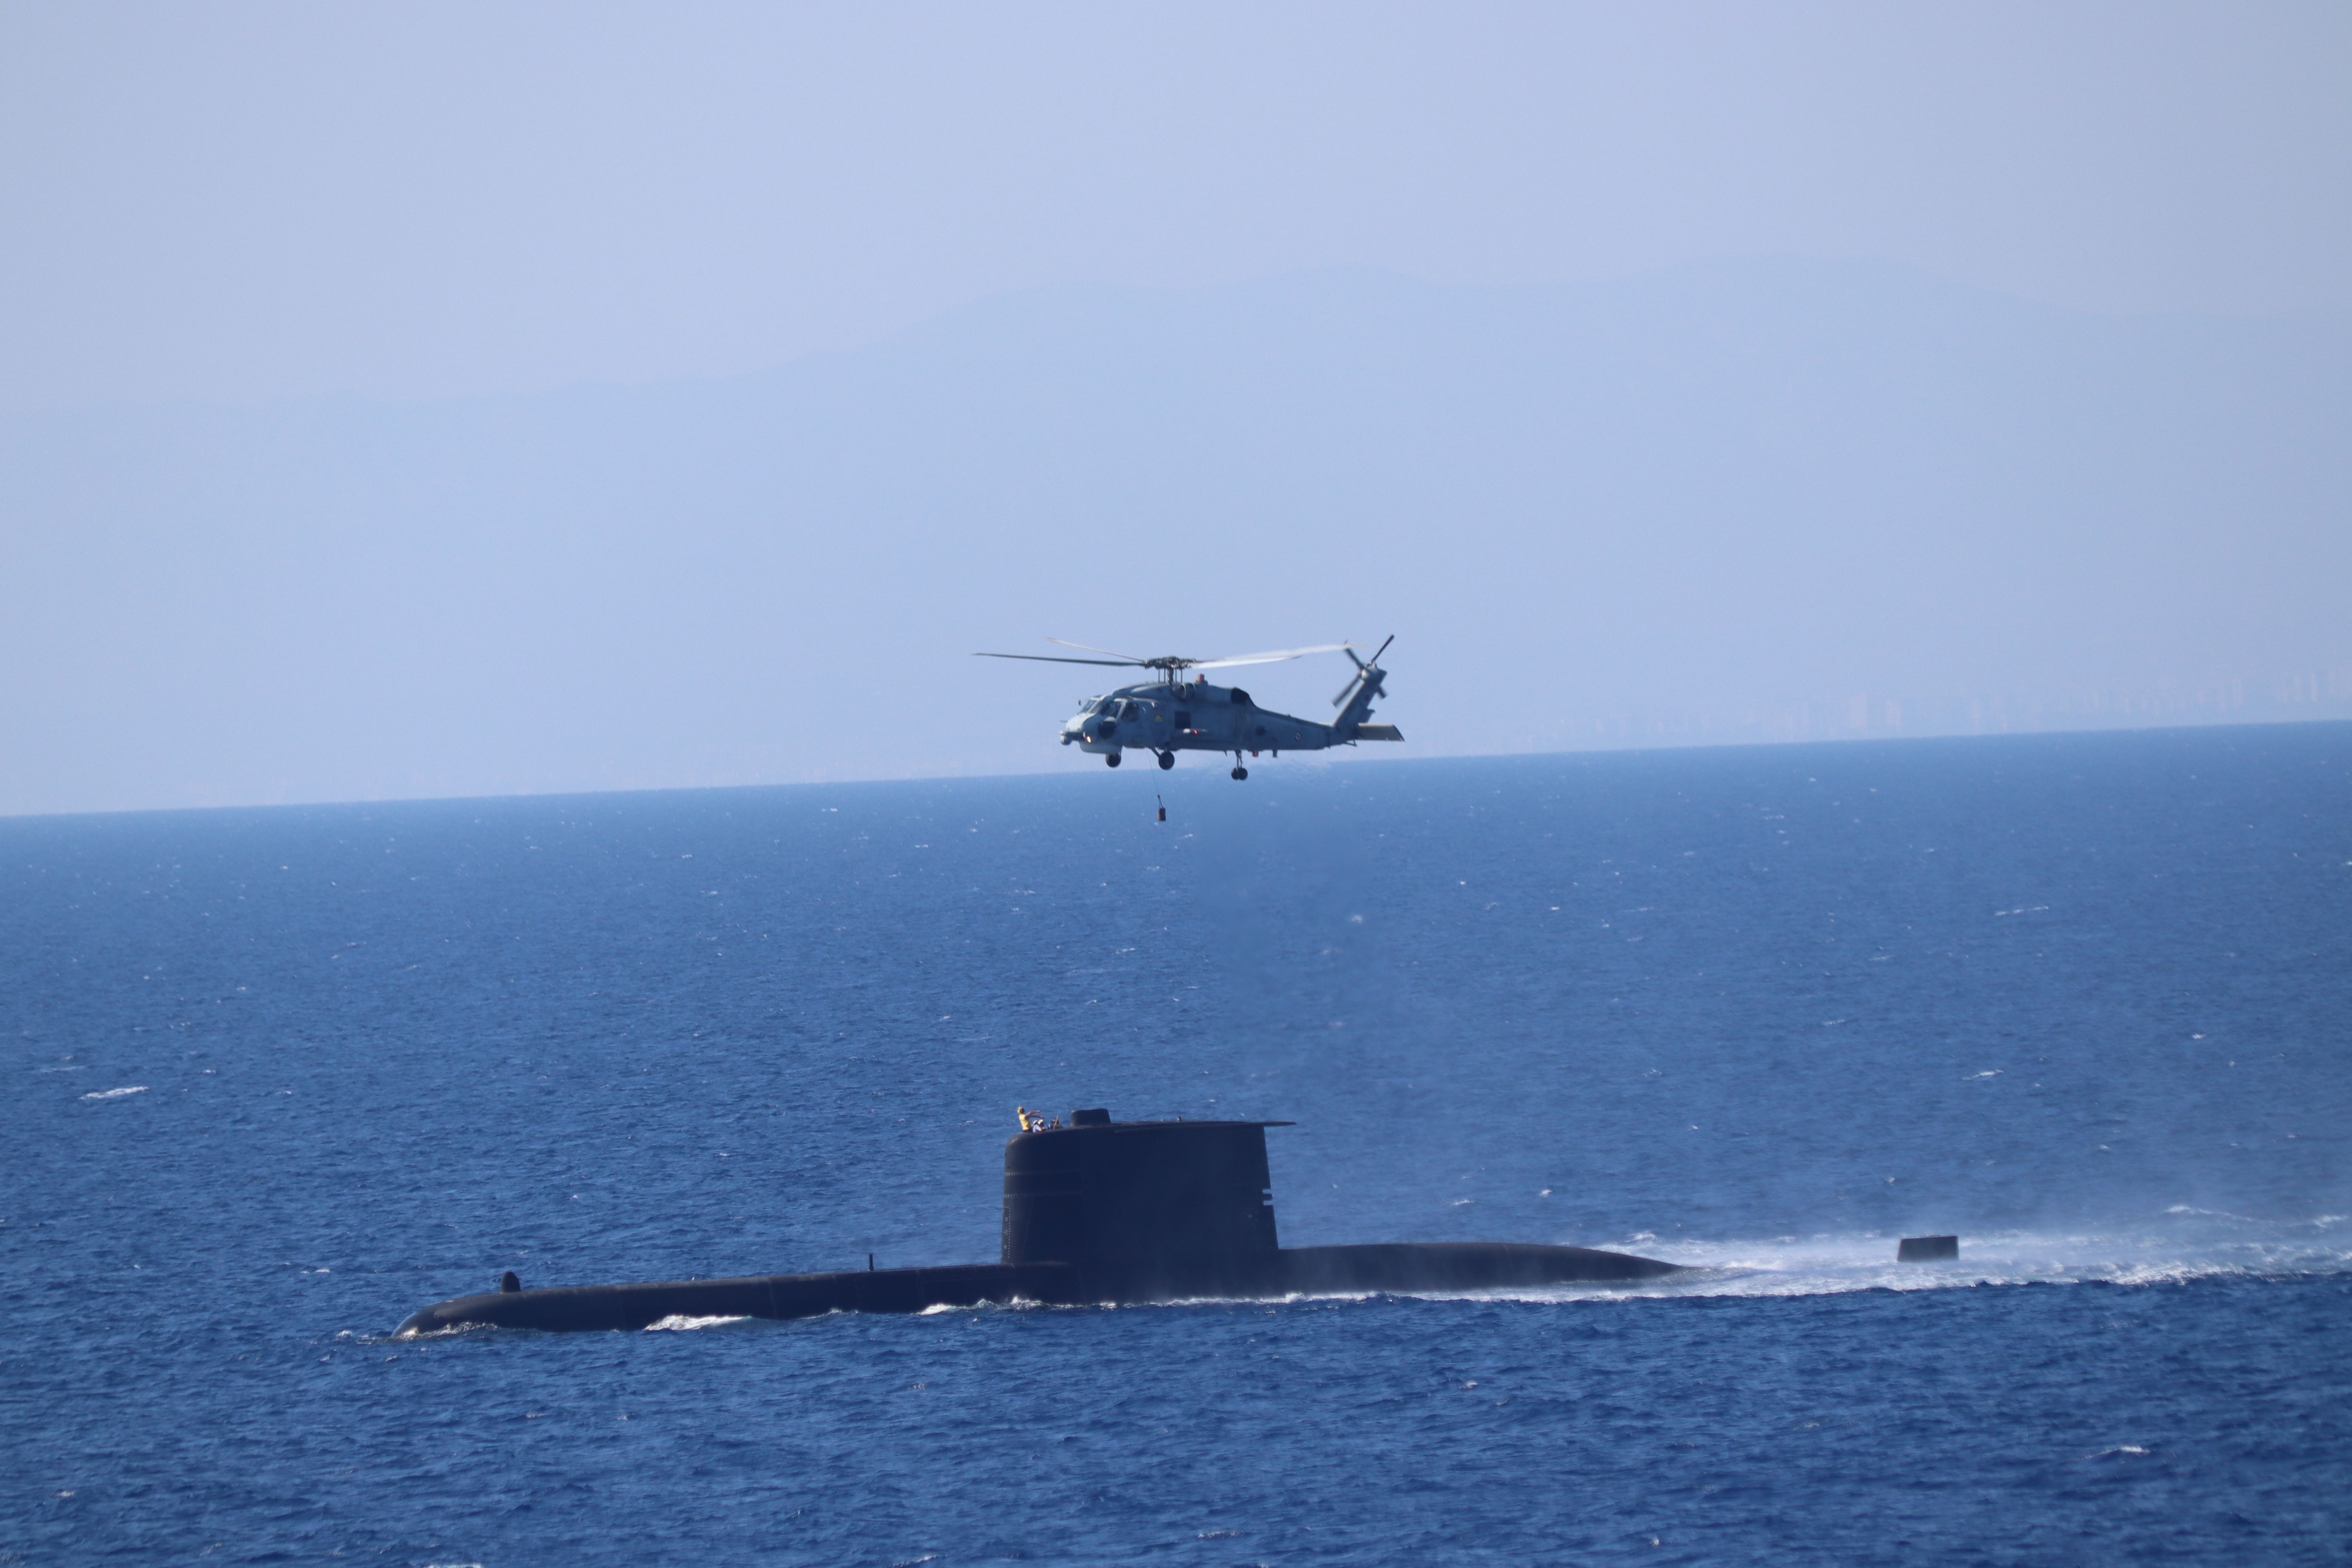 Turkiye demonstrates its preparedness to lead NATO Response Force